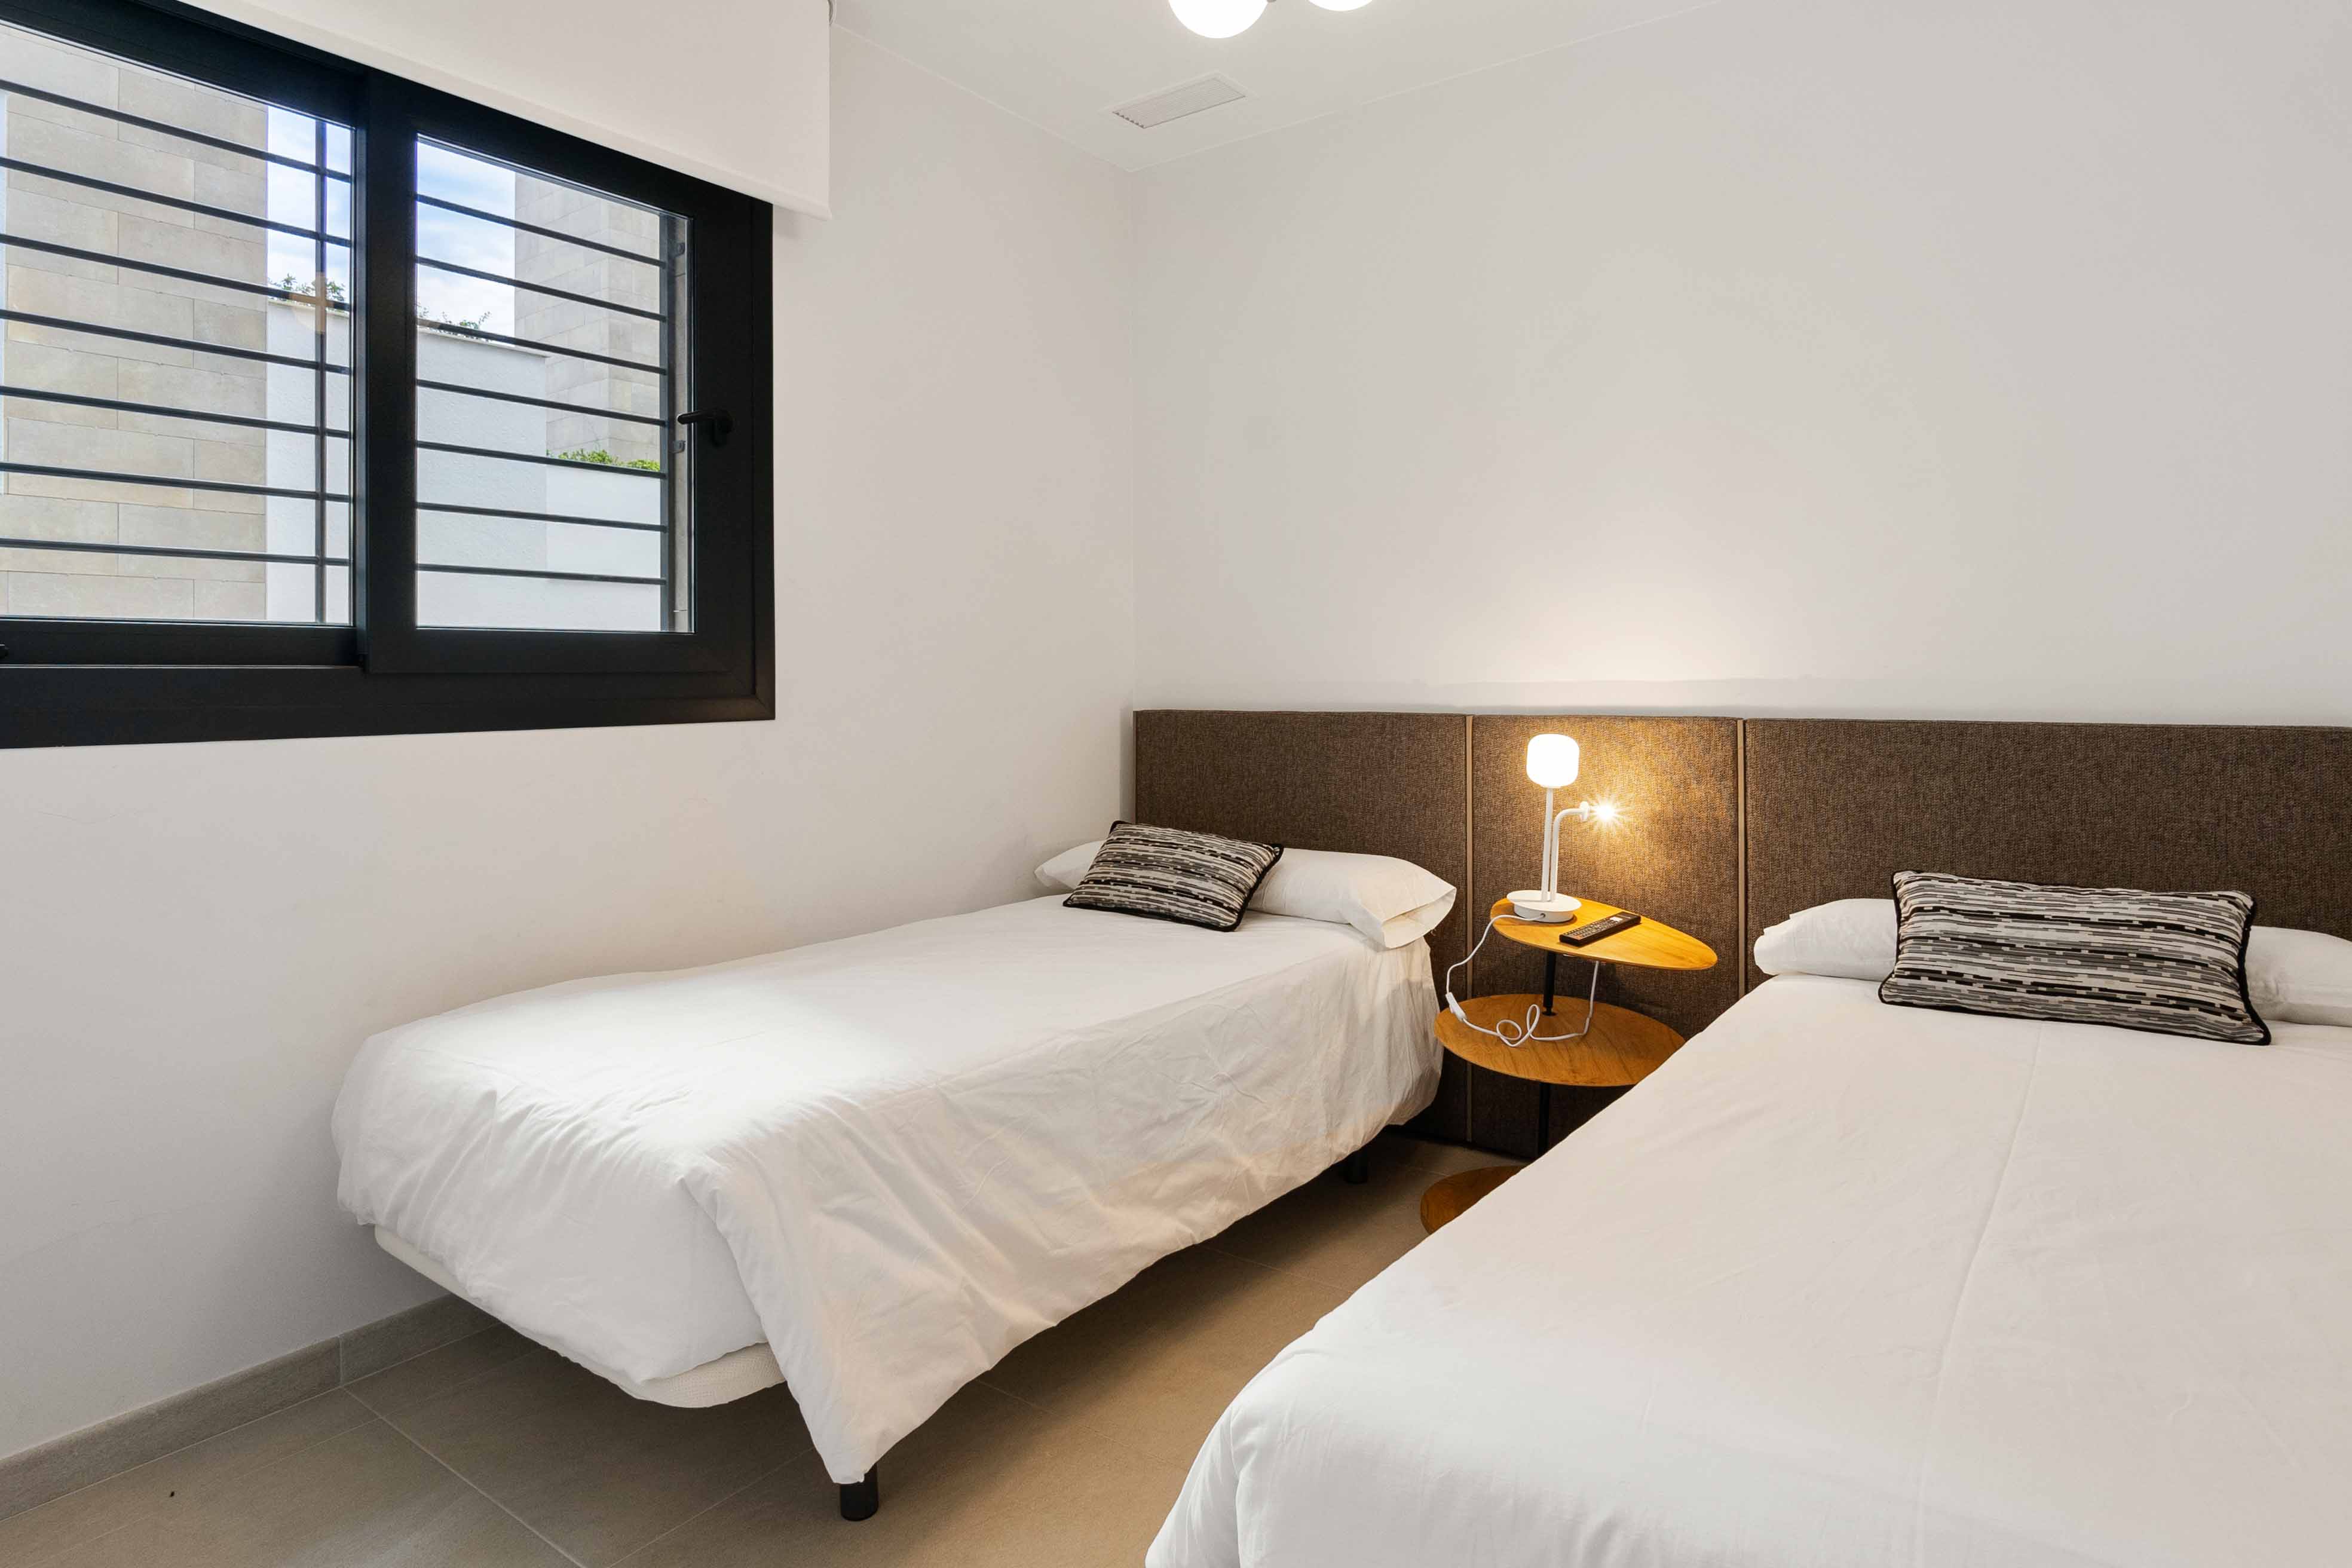 3405-03749. Luxury apartment in exclusive resdiential of Orihuela Costa (Alicante).